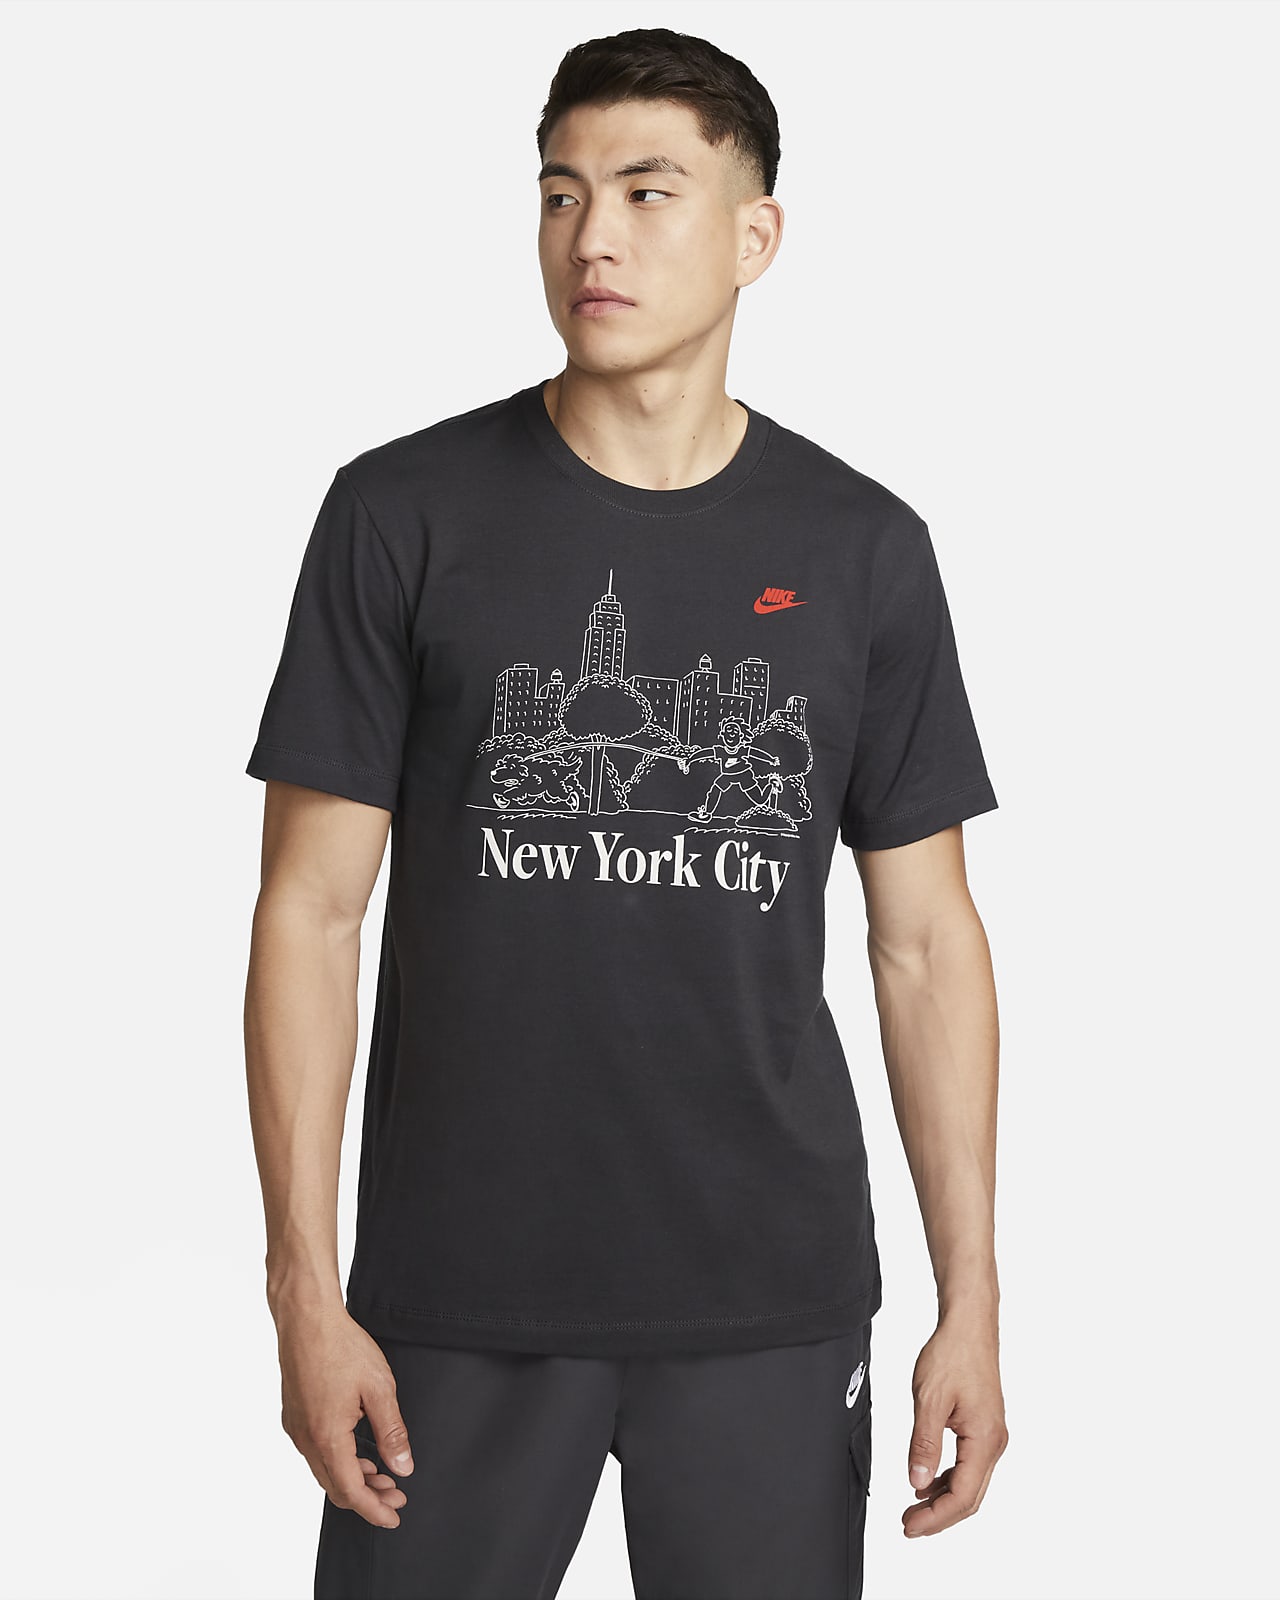 Men's Yoga Tops & T-Shirts. Nike CA